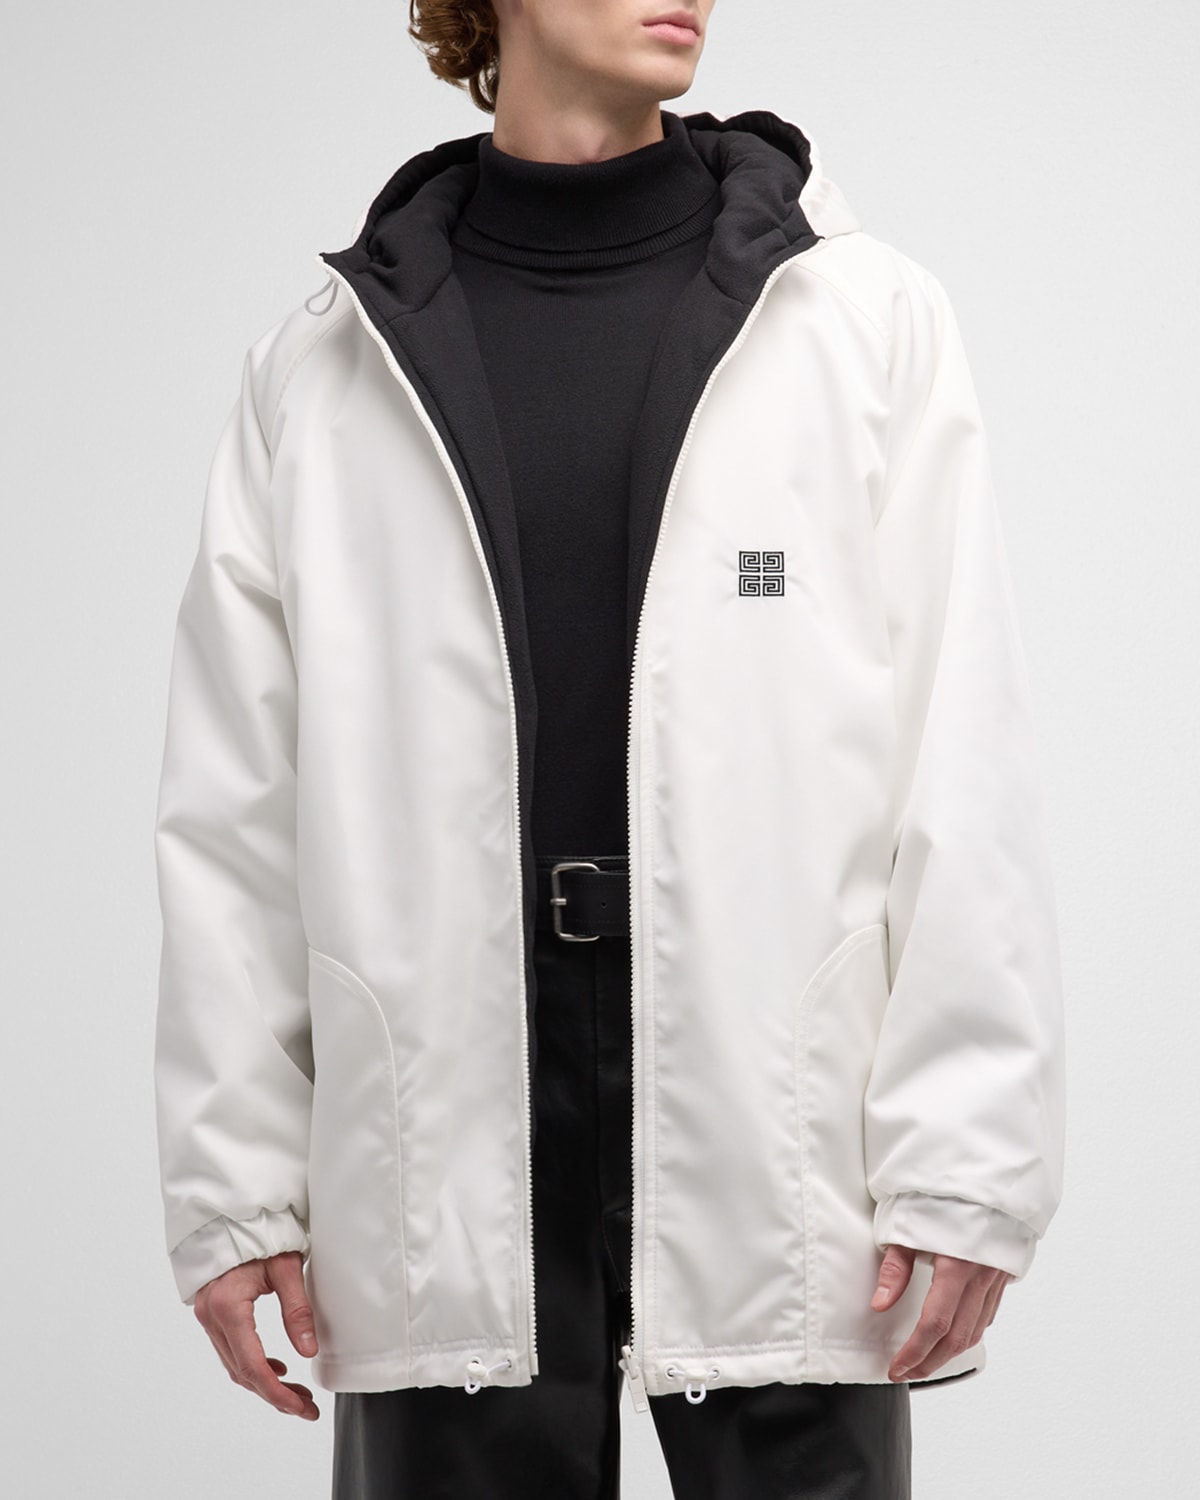 Givenchy Men's Reversible Fleece Football Parka Jacket In Black/white